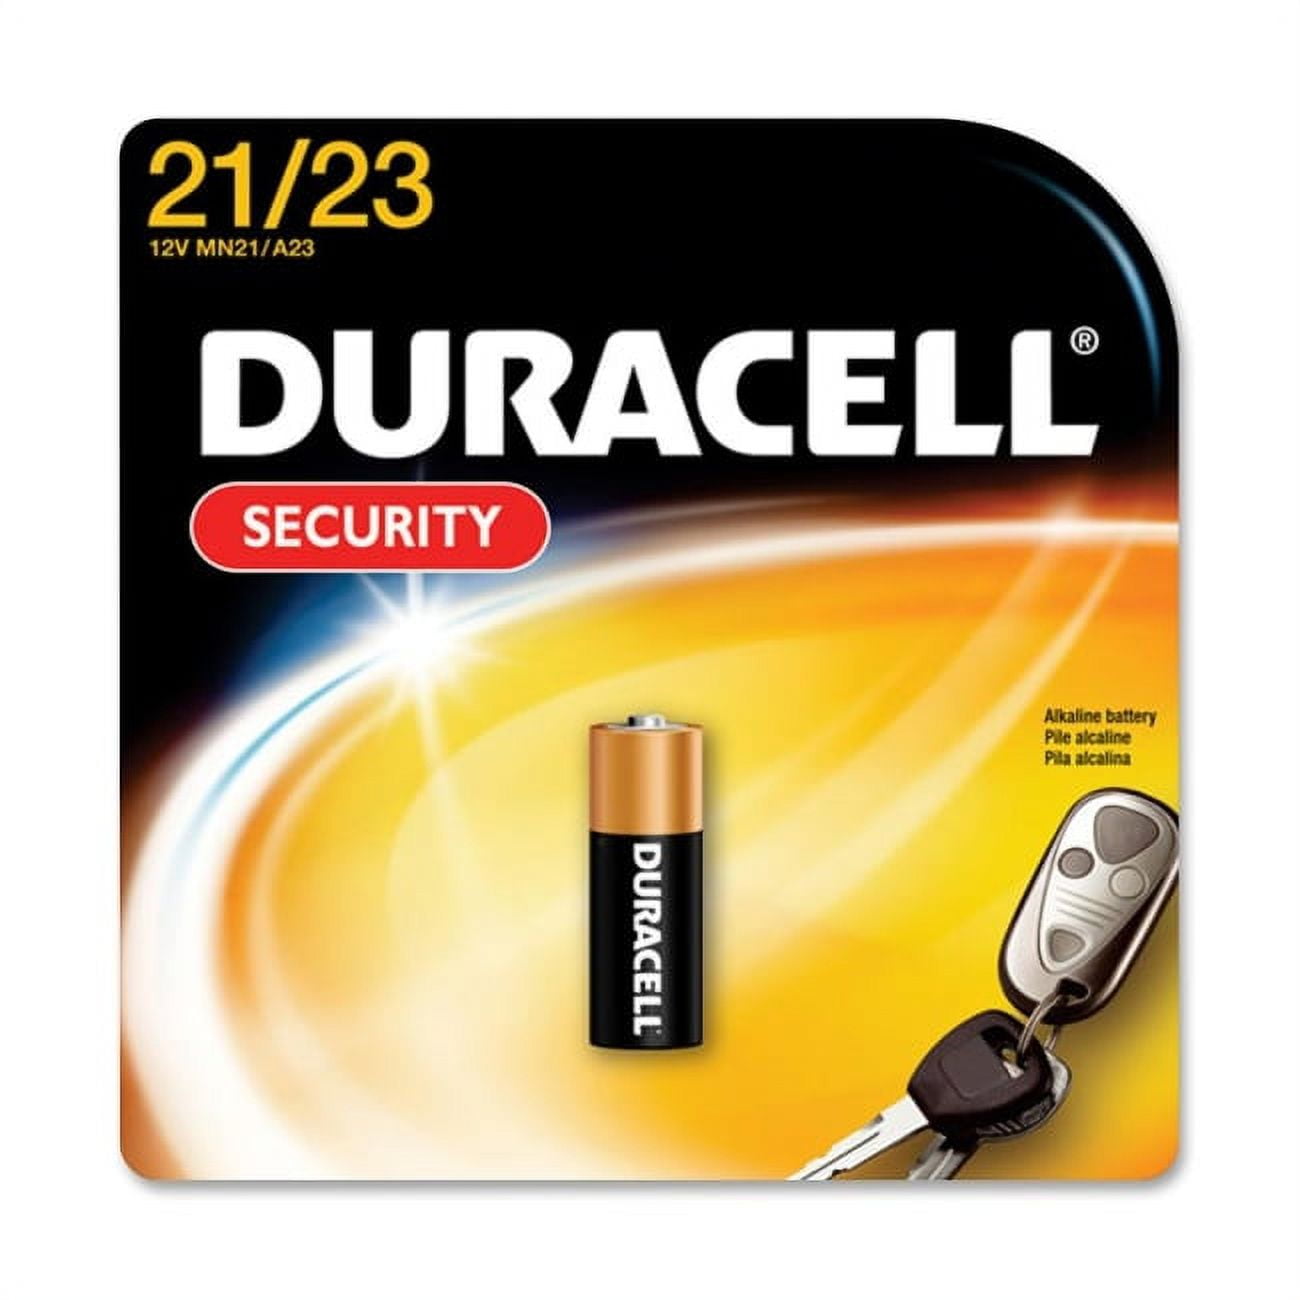 Duracell 12V Batteries Pack of 2 MN21 E23DURB2